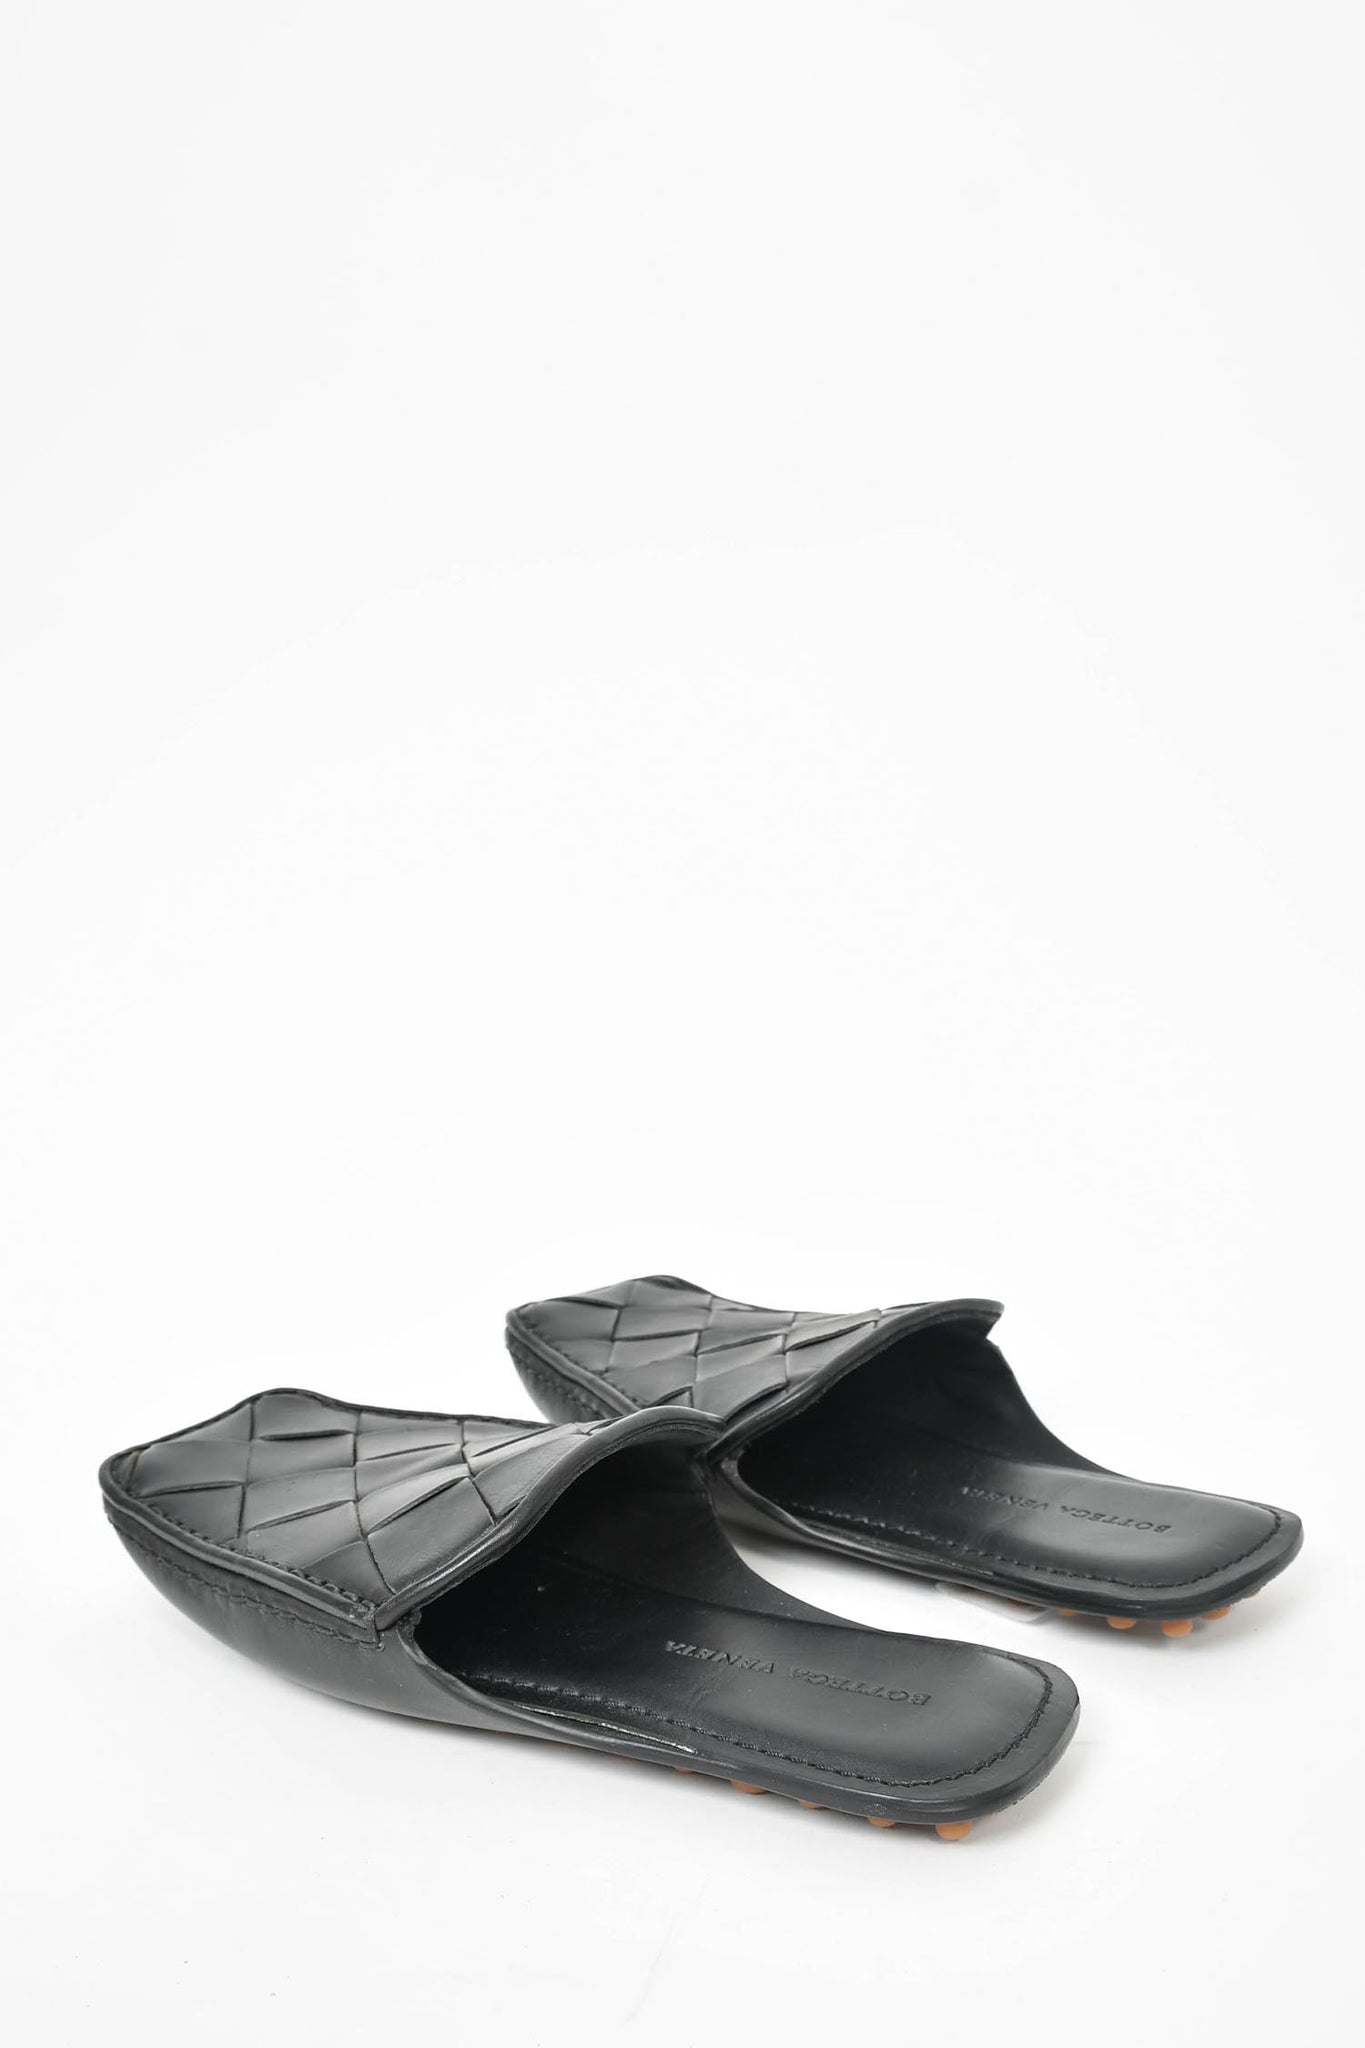 Bottega Veneta Black Intrecciato Leather Mule Slides Size 36.5